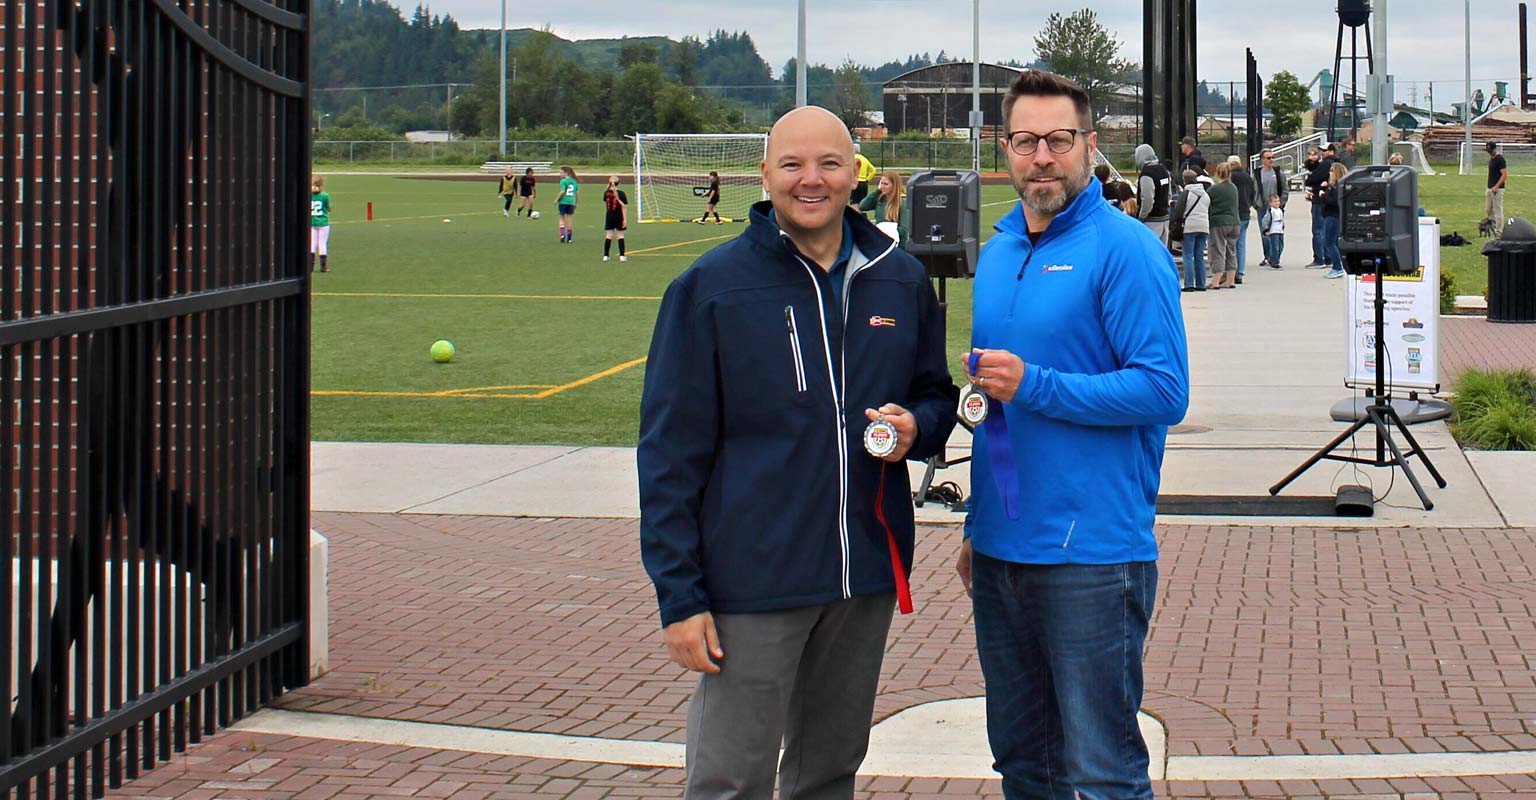 Classic Youth Soccer Tournament Builds Teamwork Les Schwab